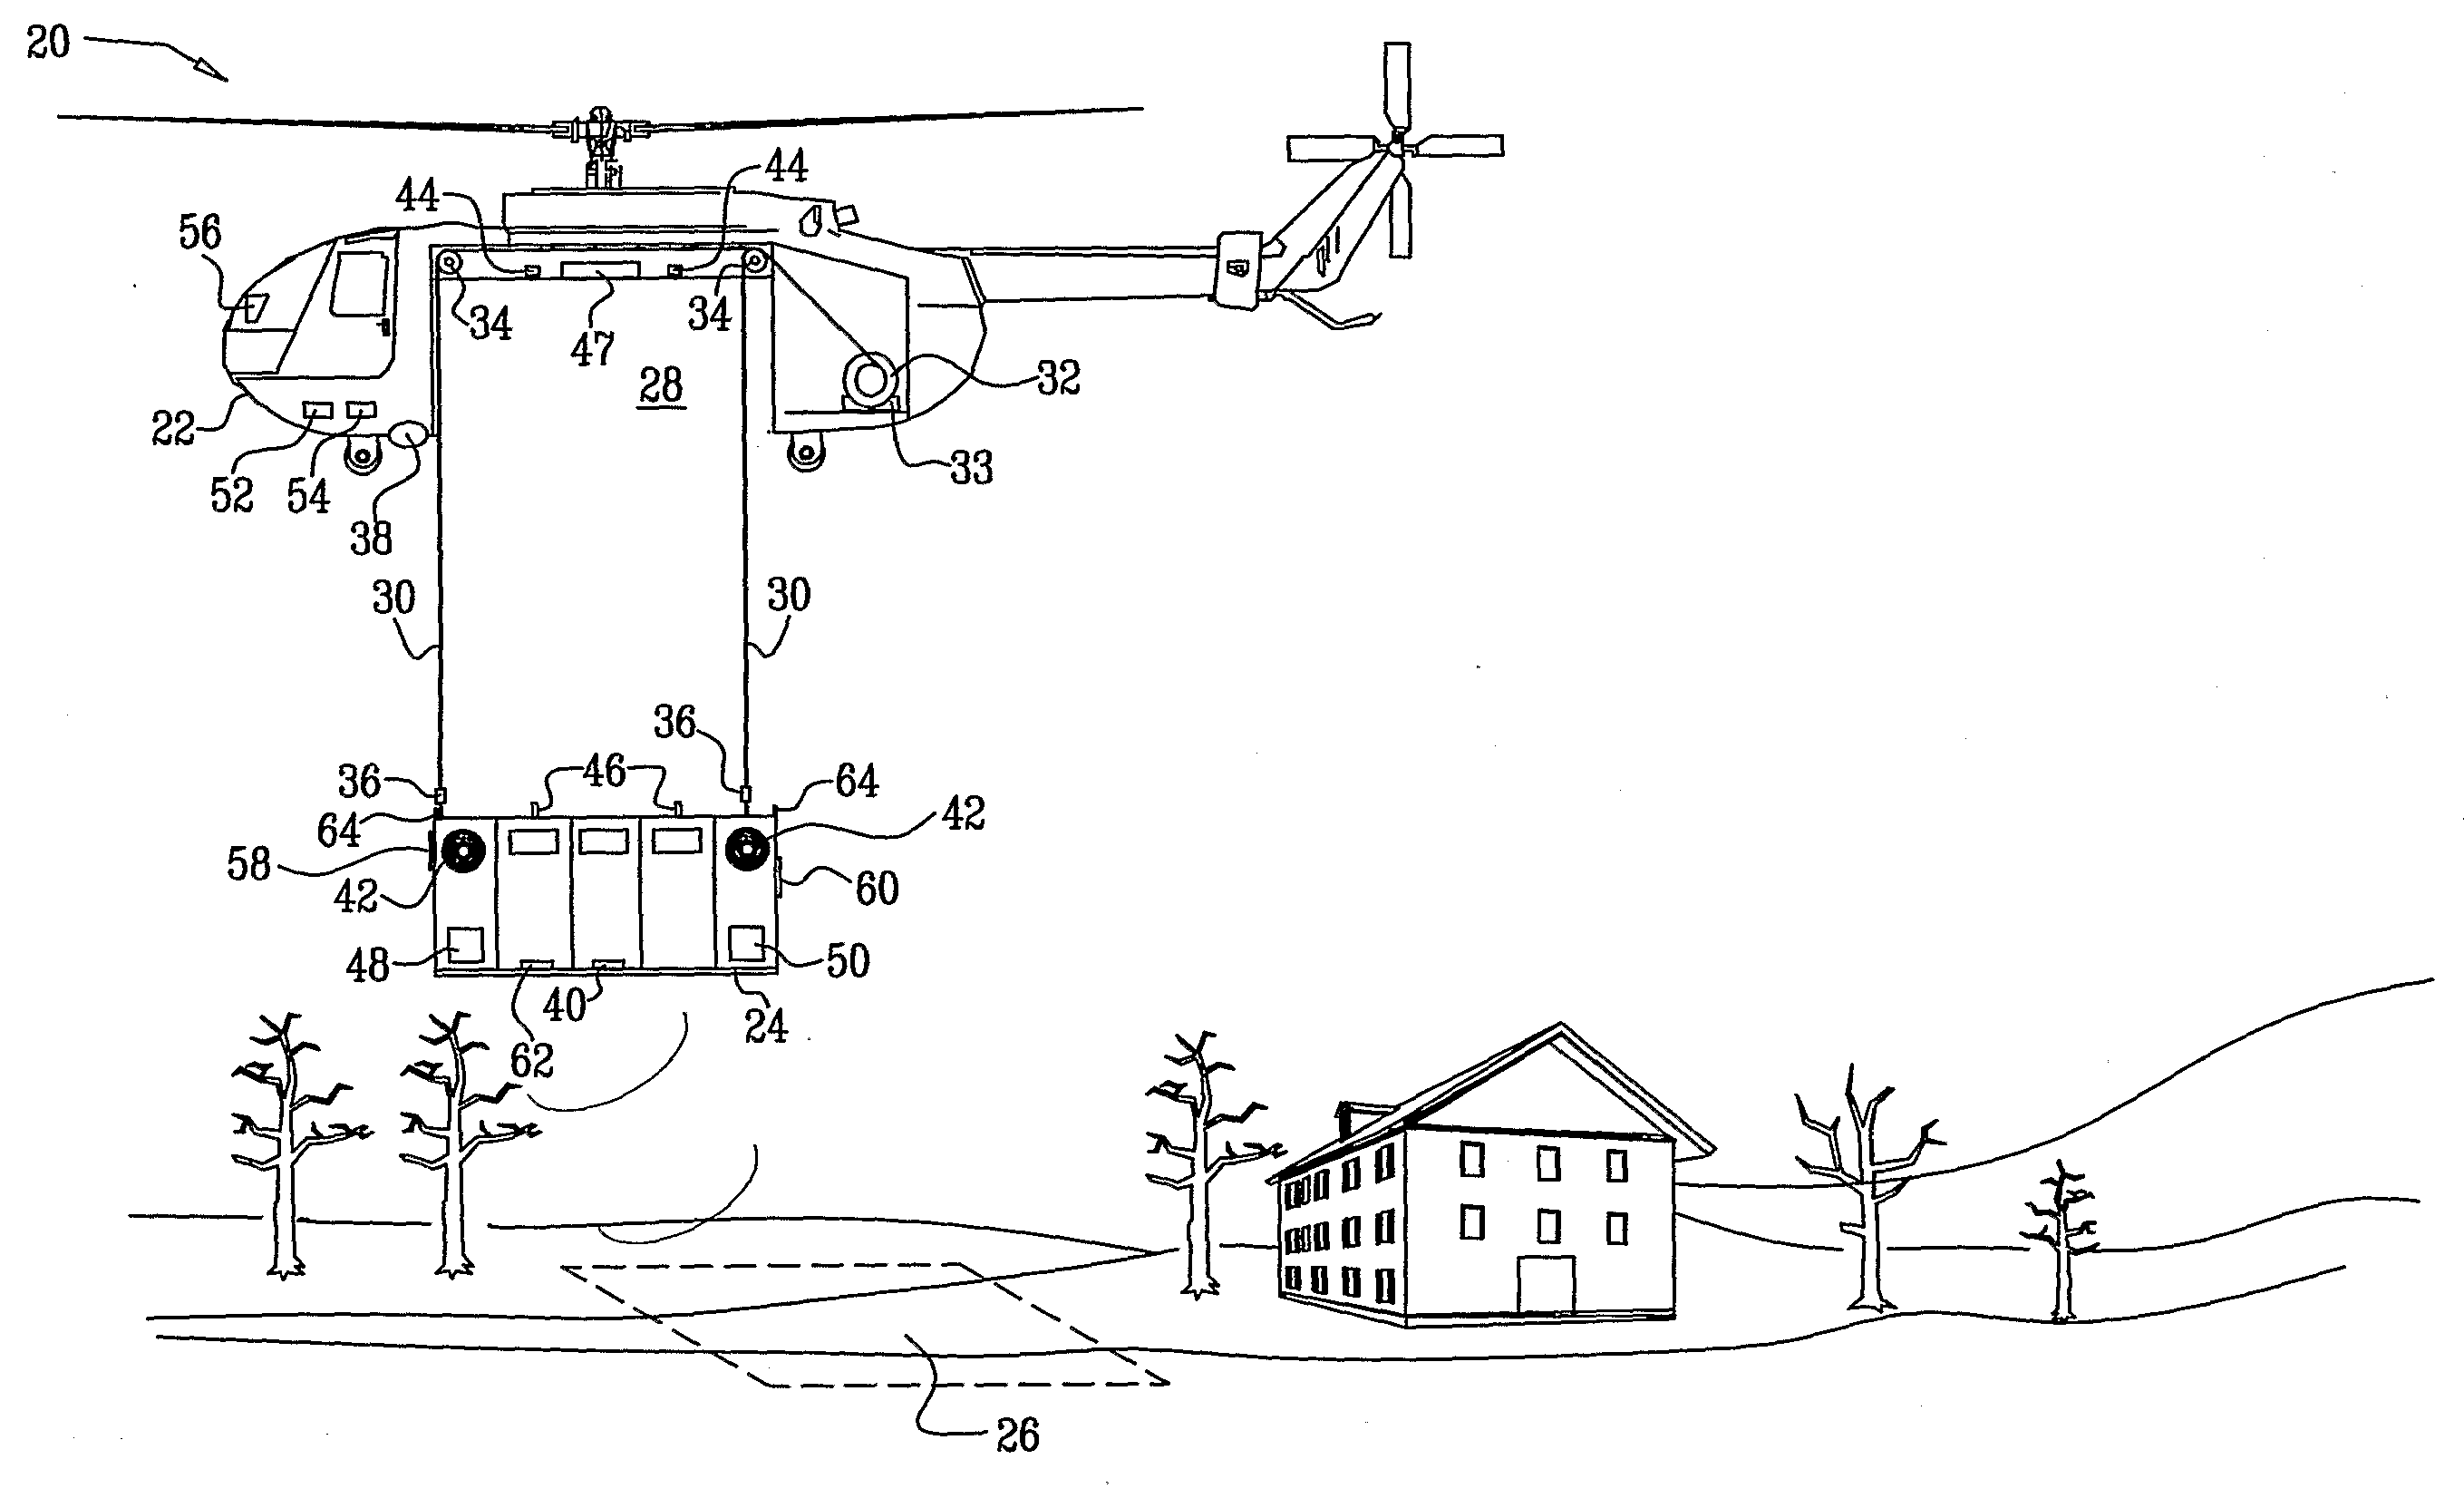 Aerial transport system